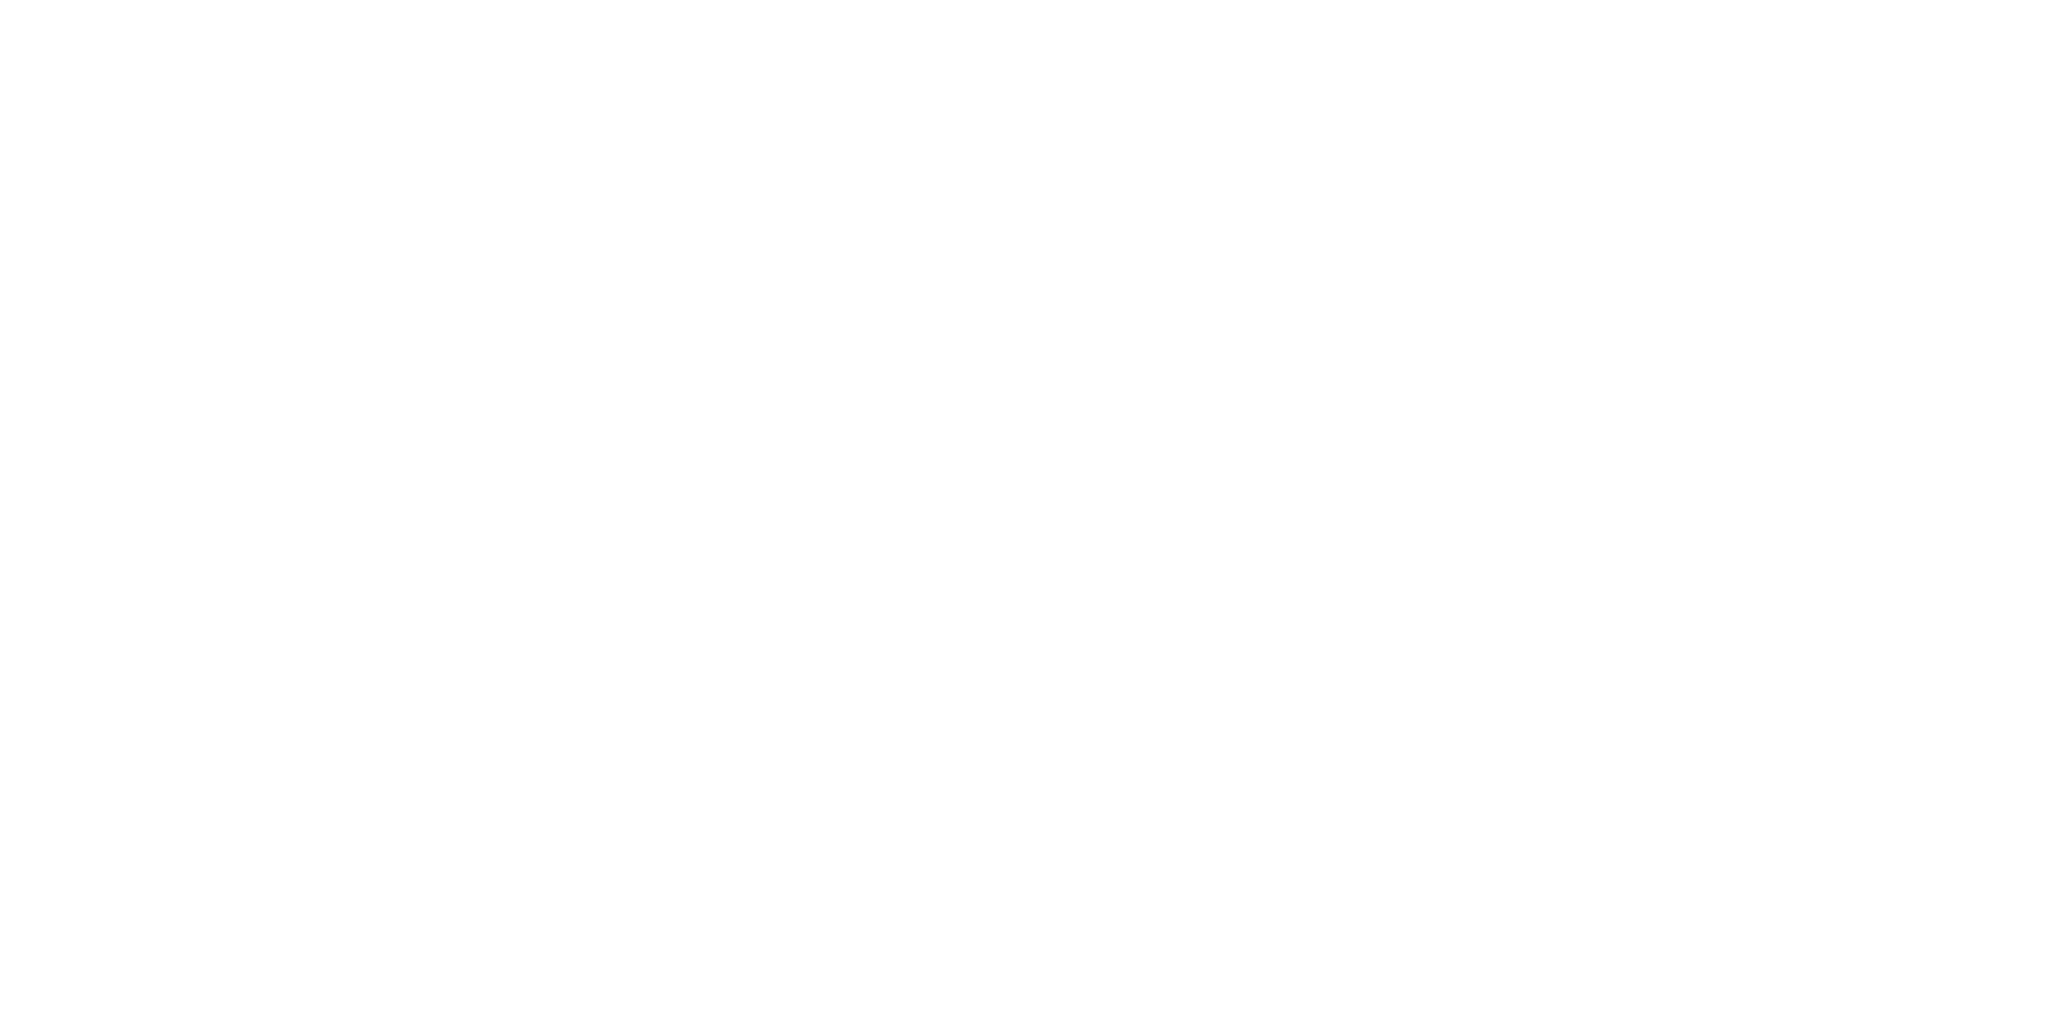 Fierce Fighting Championship  Utah's largest MMA promotion